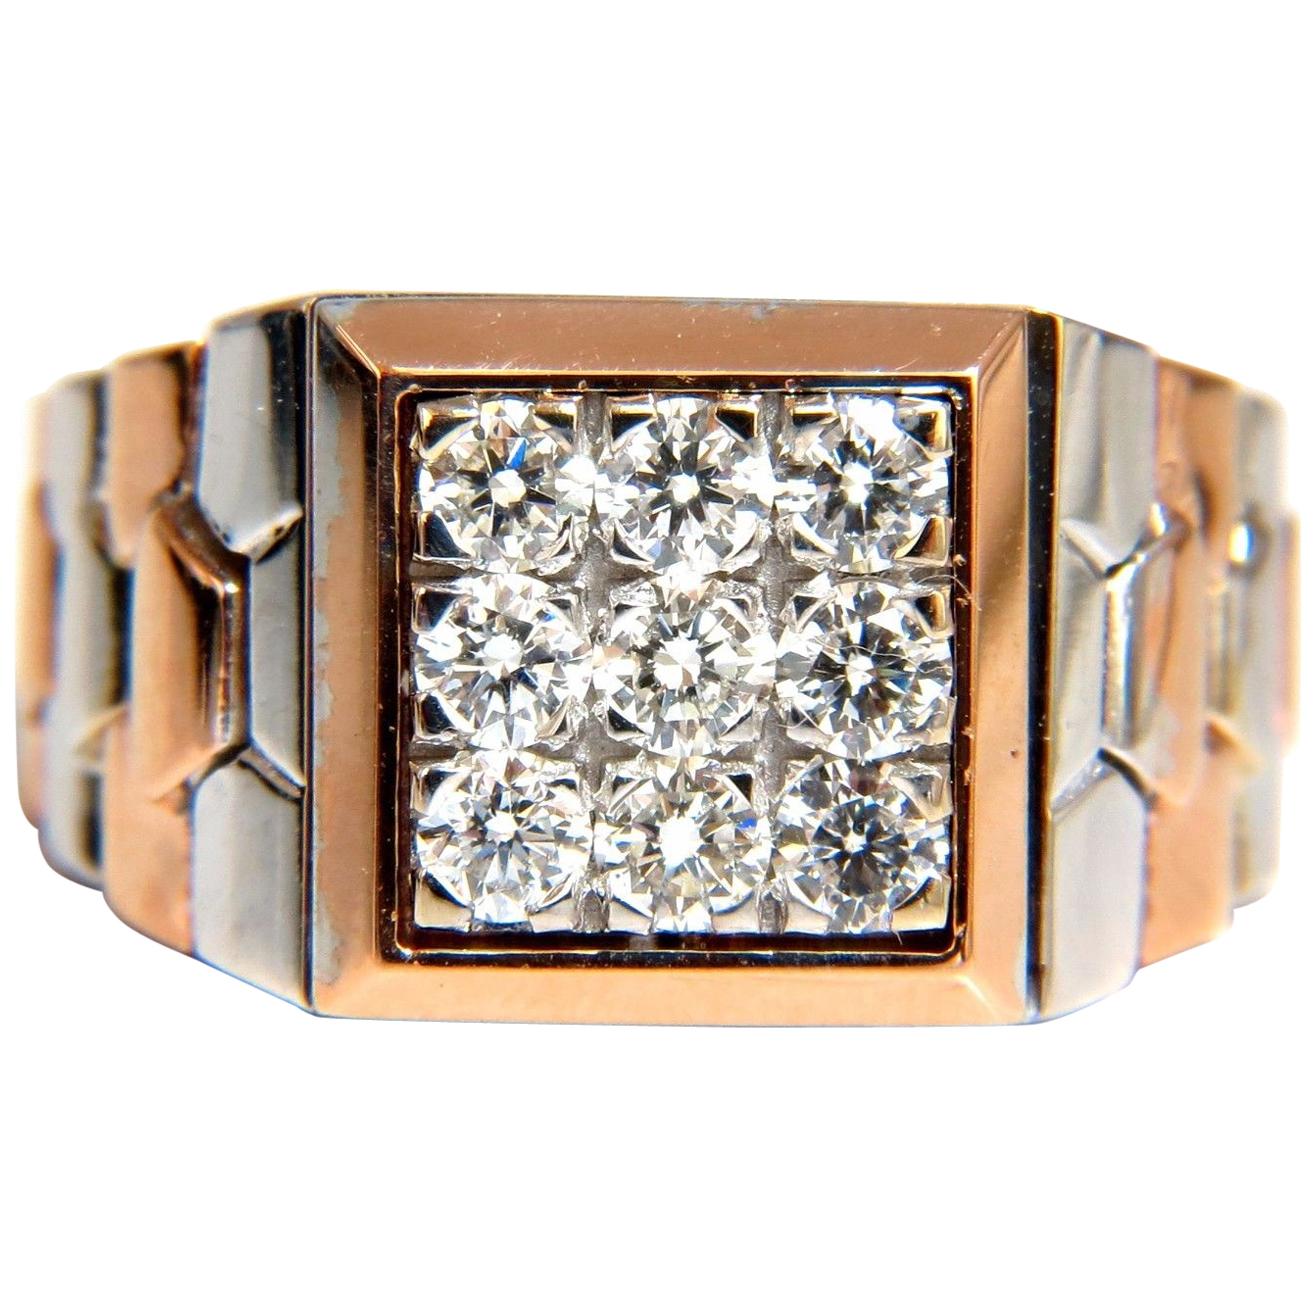 1.02ct natural diamonds "watch band" mens ring G/Vs 3d 18kt 15 gram Flexible